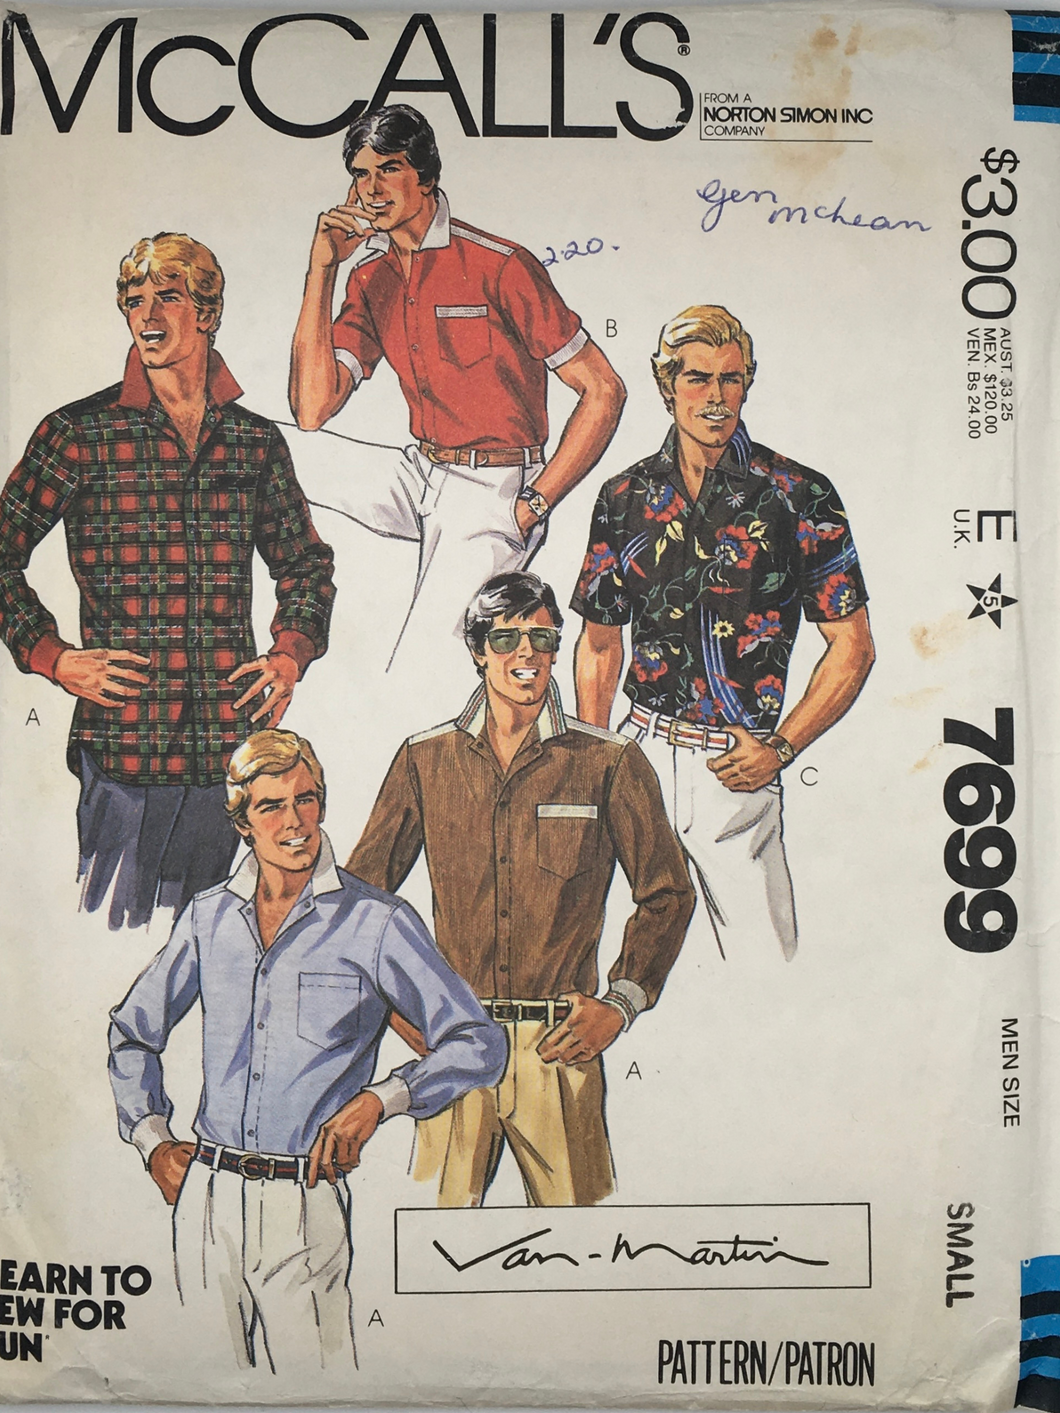 1981 Vintage Sewing Pattern: McCalls 7699